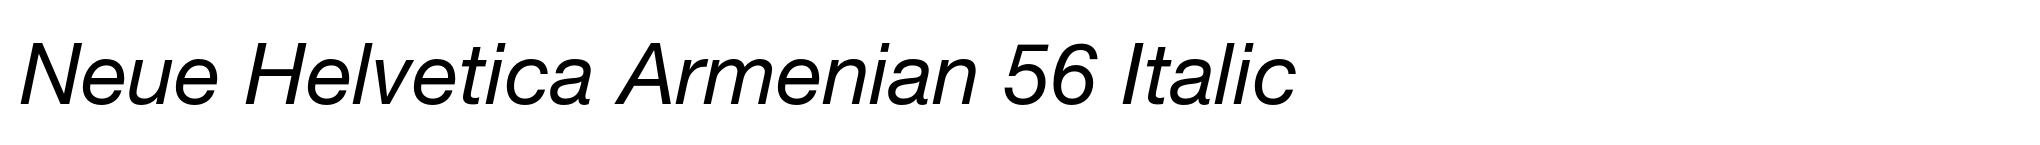 Neue Helvetica Armenian 56 Italic image